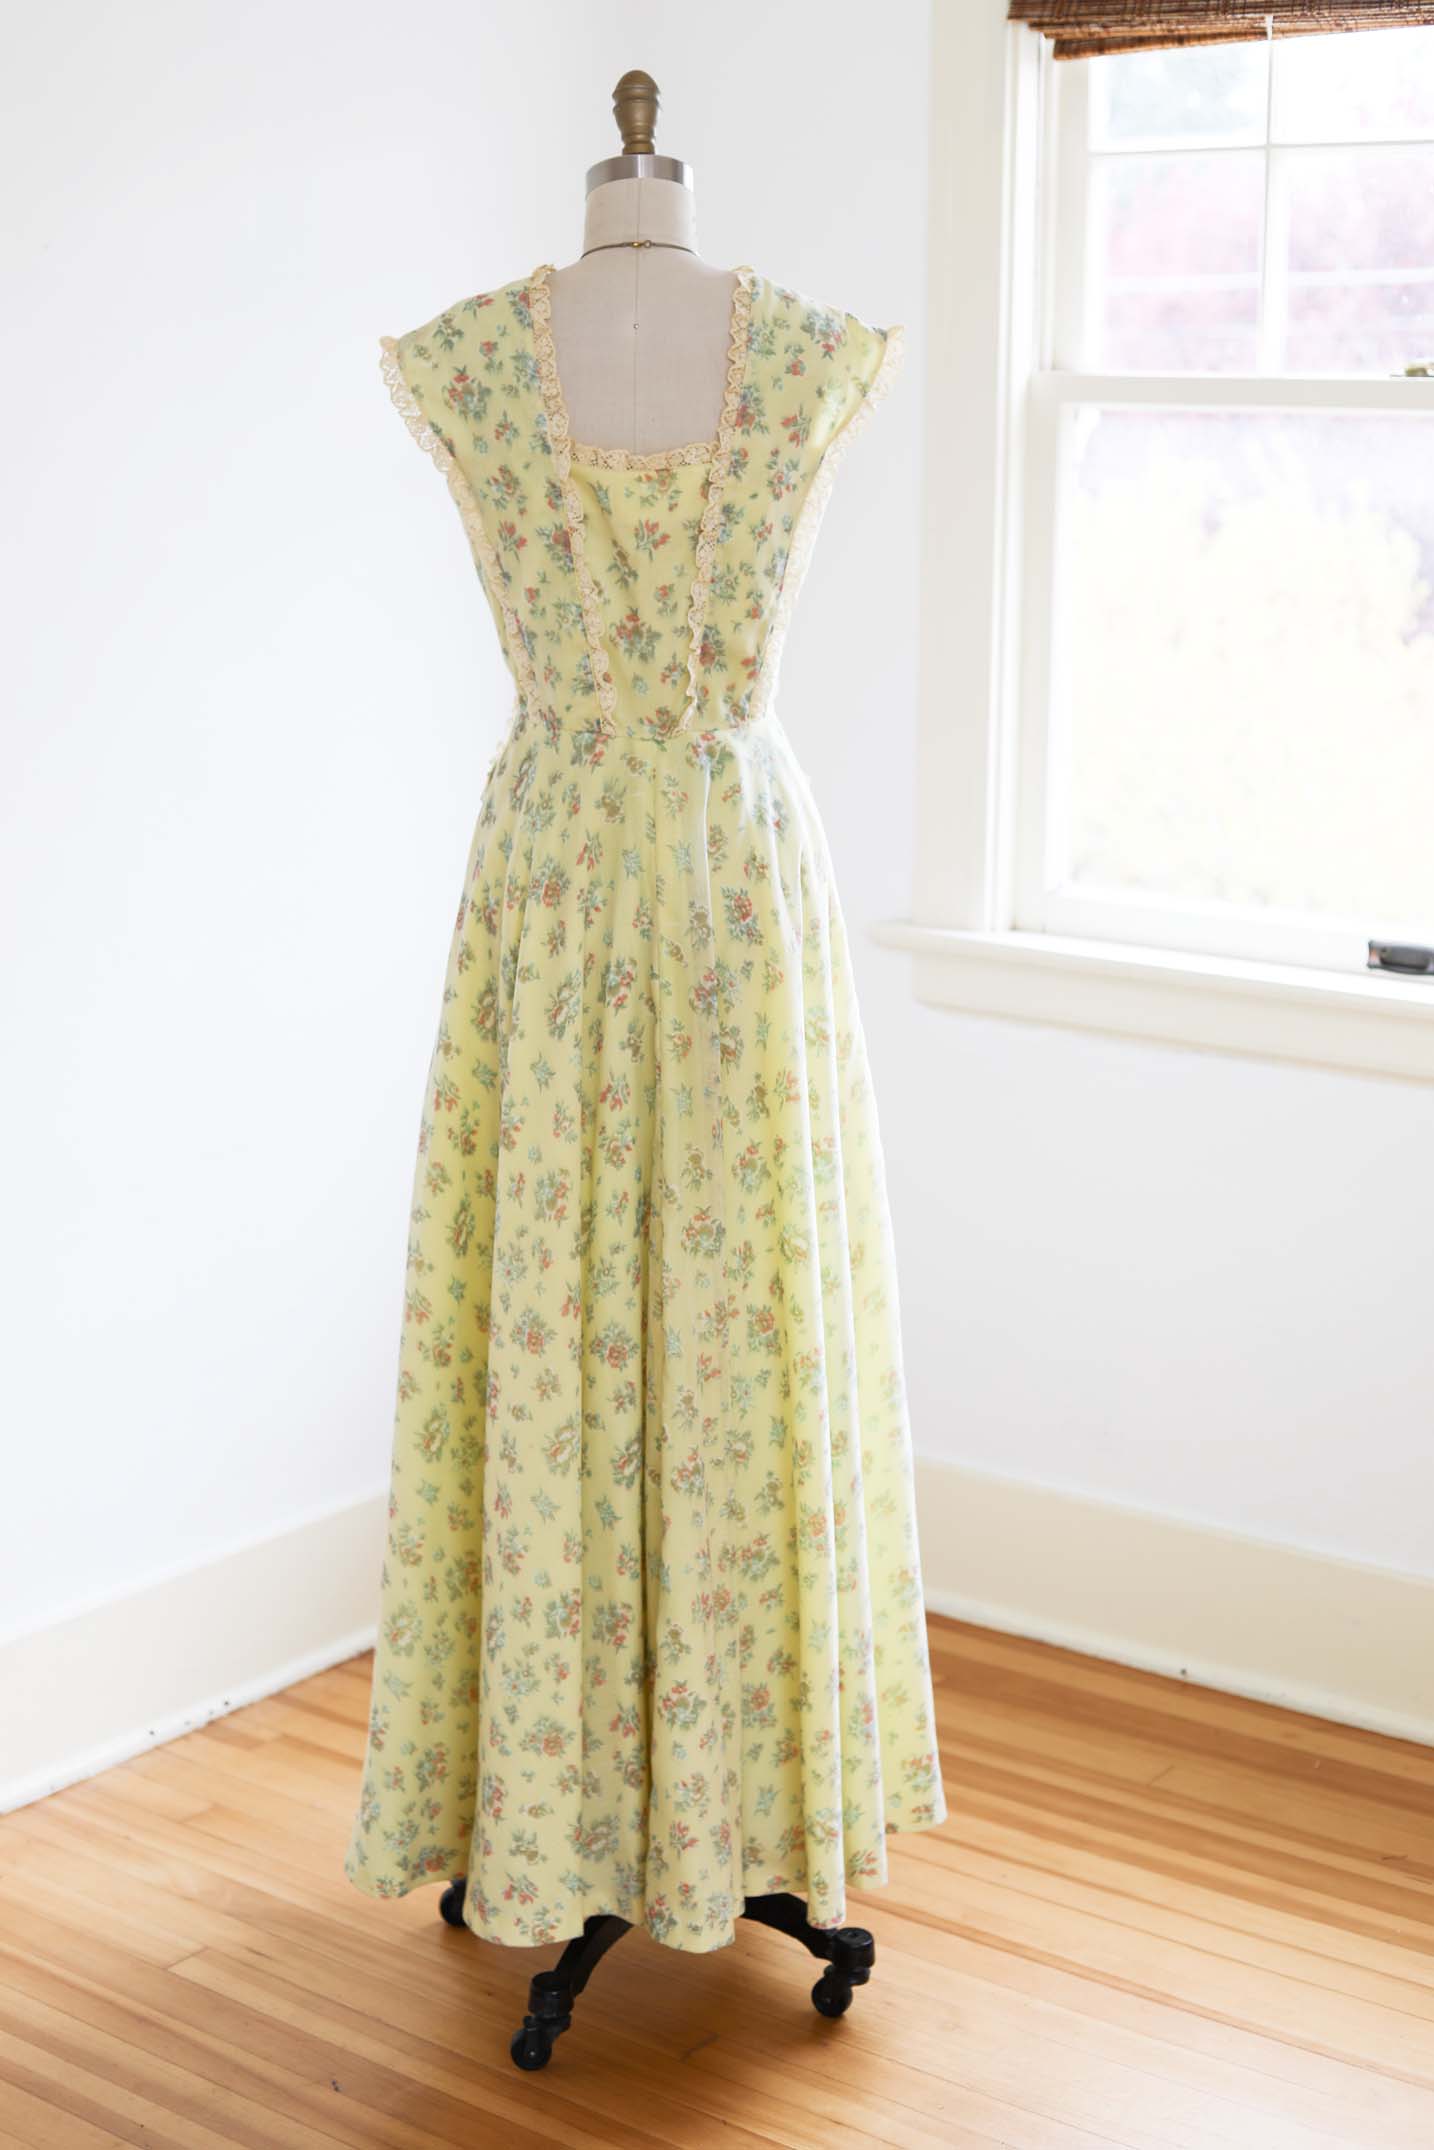 Vintage 1970s Does 1930s Maxi Dress - SPLENDID Pale Pastel Yellow Floral Print Cotton Summer Gown Sundress w Triangle Deco Pockets Size S